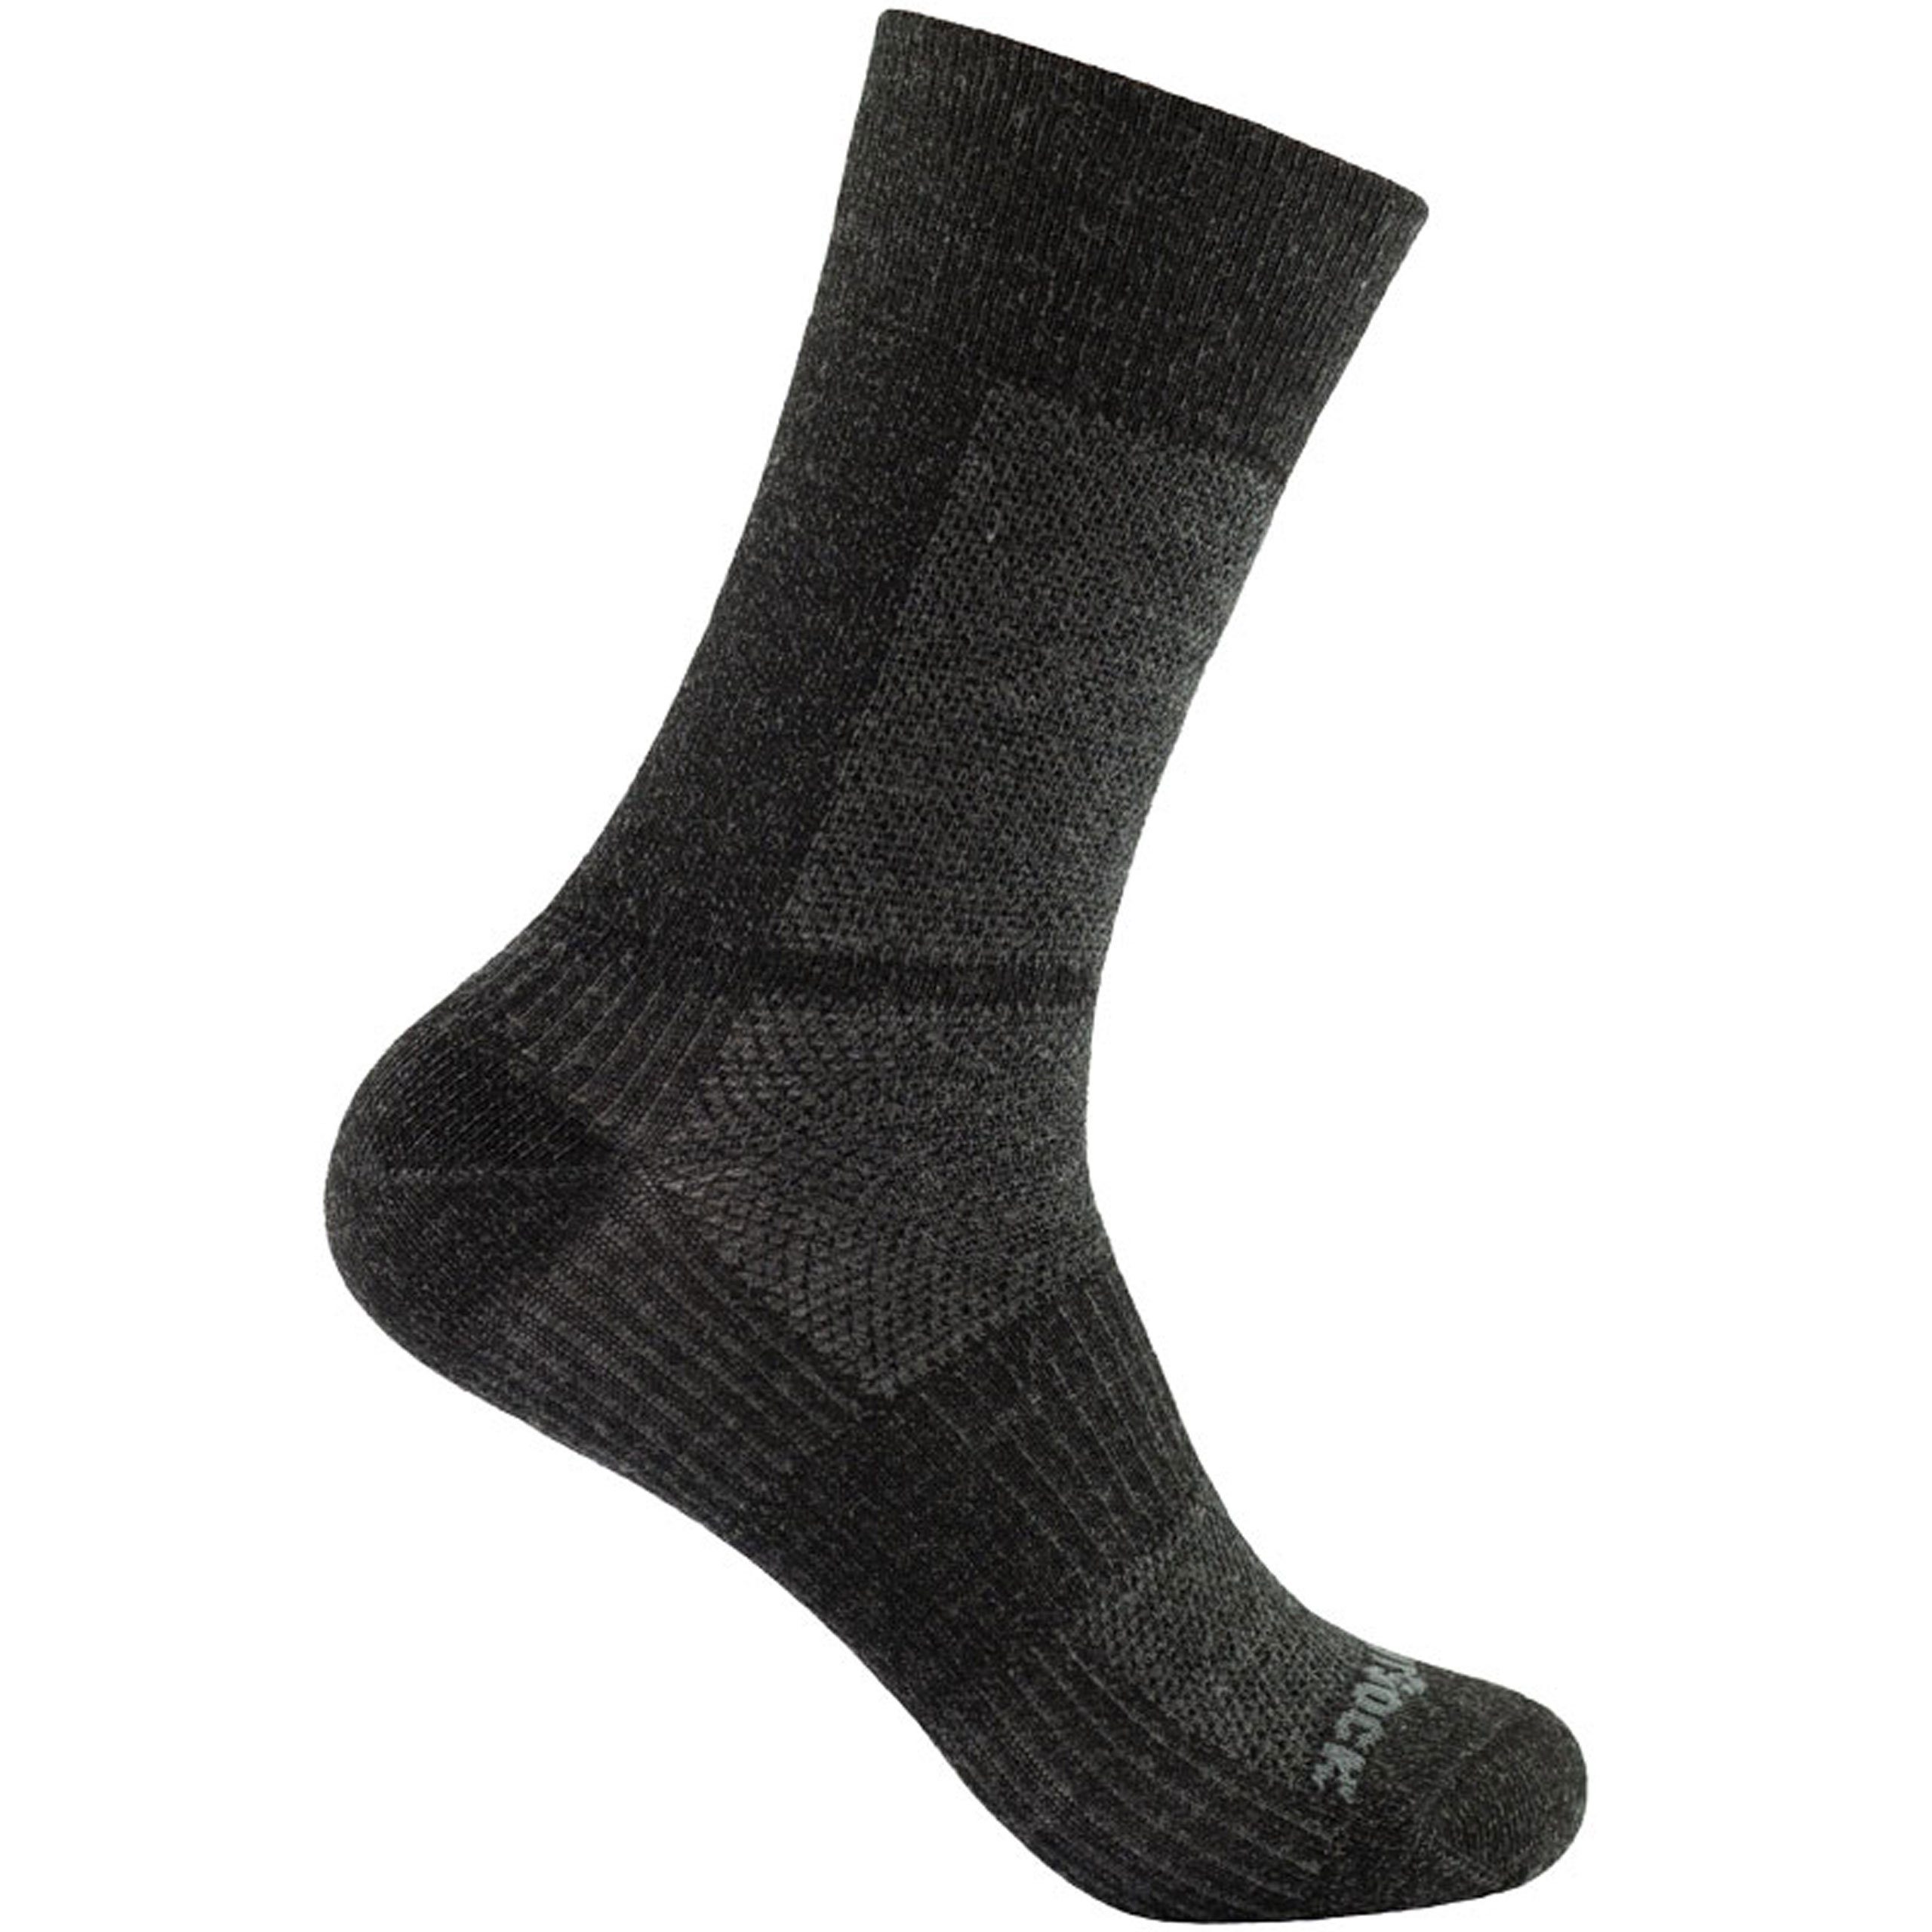 WRIGHT SOCKS II doppellagige - greyblack Merino Laufschuh Coolmesh Wrightsock Unisex Socken